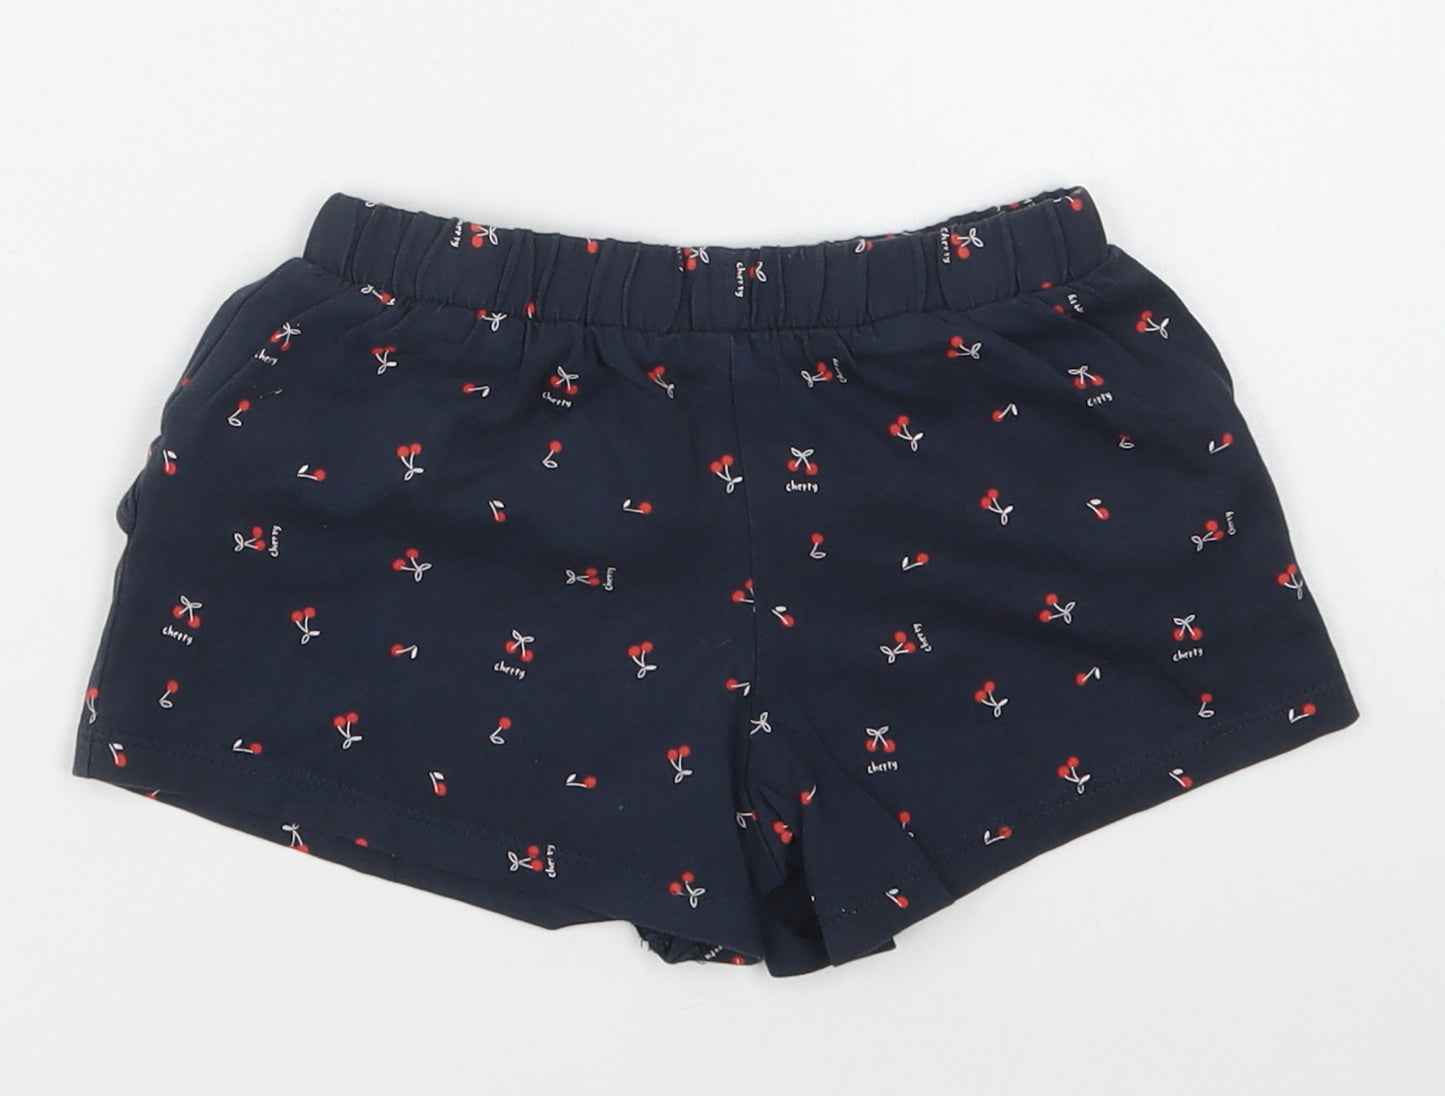 Mothercare Girls Blue Geometric Cotton Bermuda Shorts Size 4-5 Years  Regular  - Cherry Print